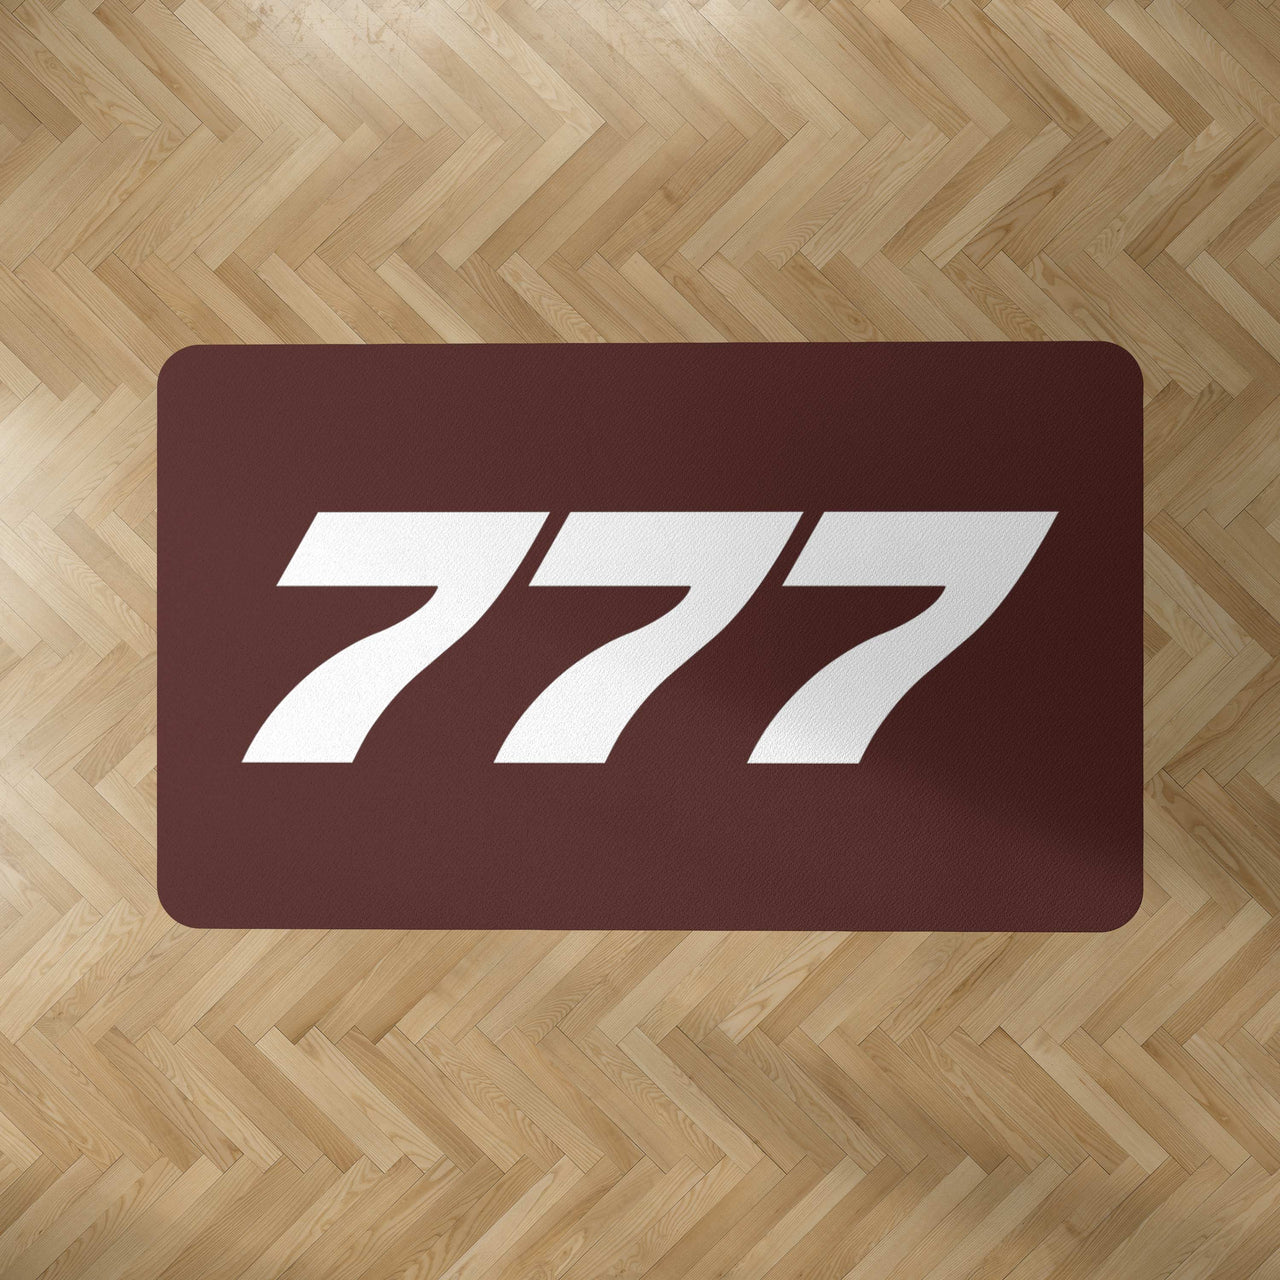 777 Flat Text Designed Carpet & Floor Mats